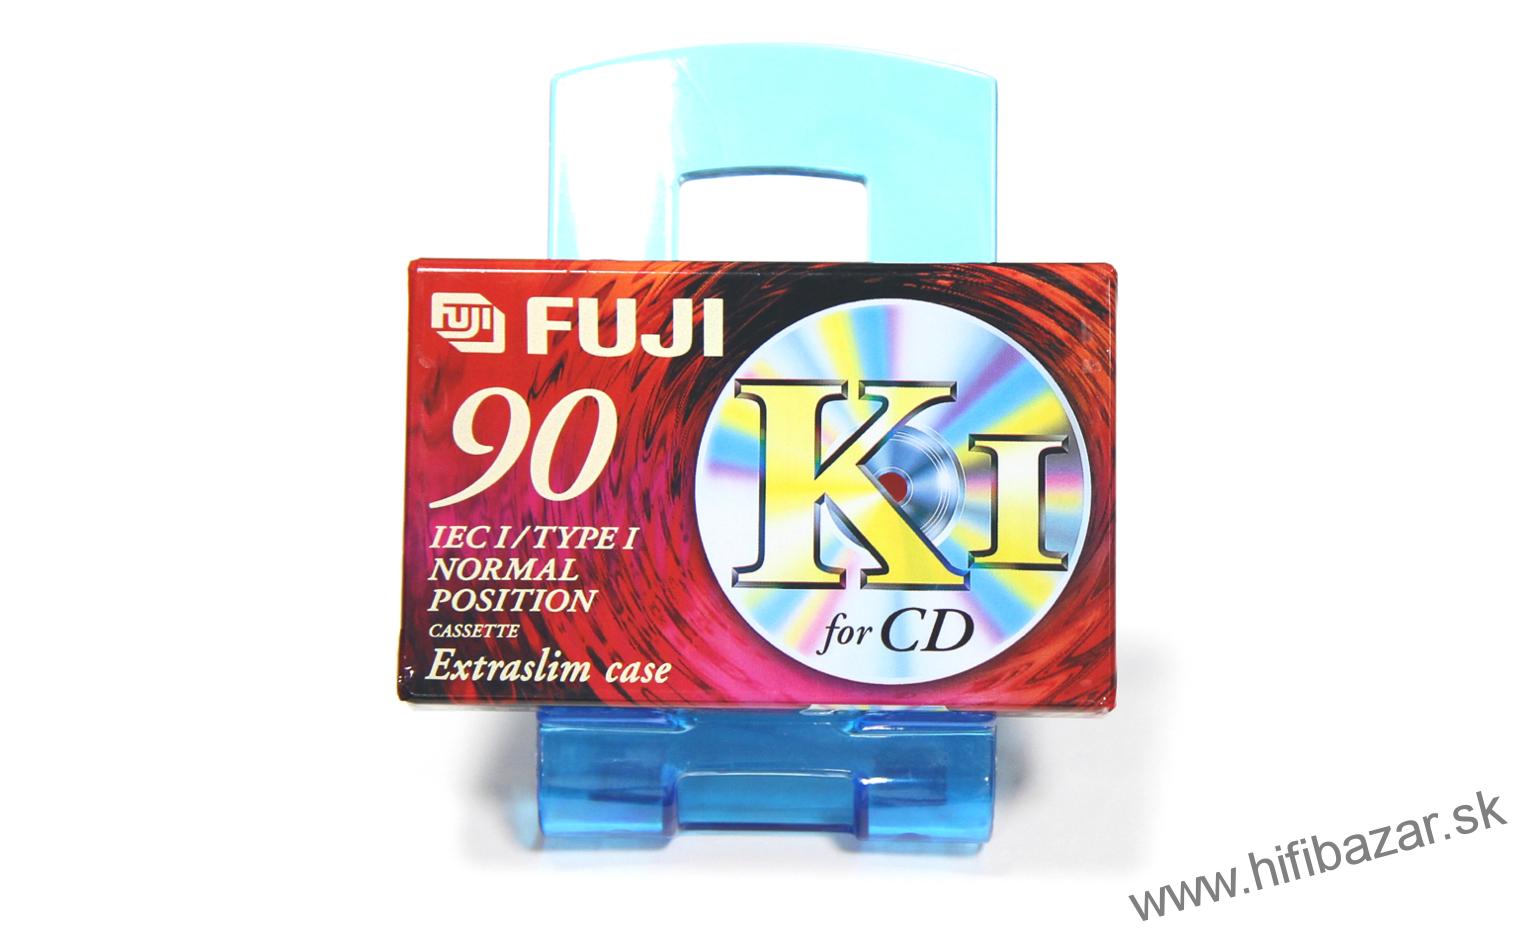 FUJI K1-90 Position Normal